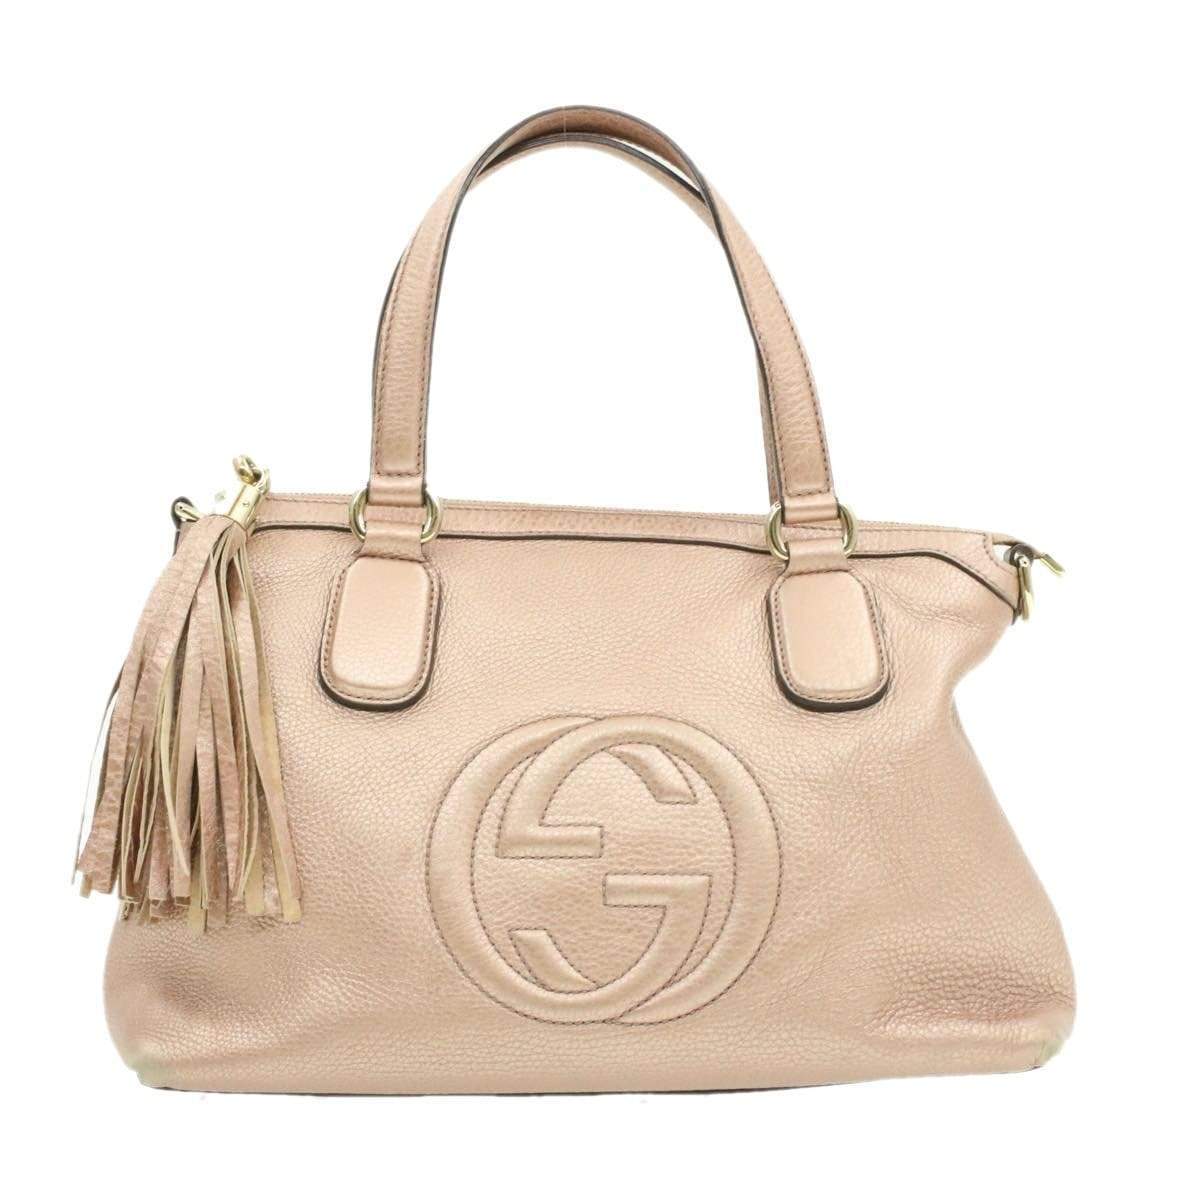 Gucci Gucci Soho Fringe Handbag